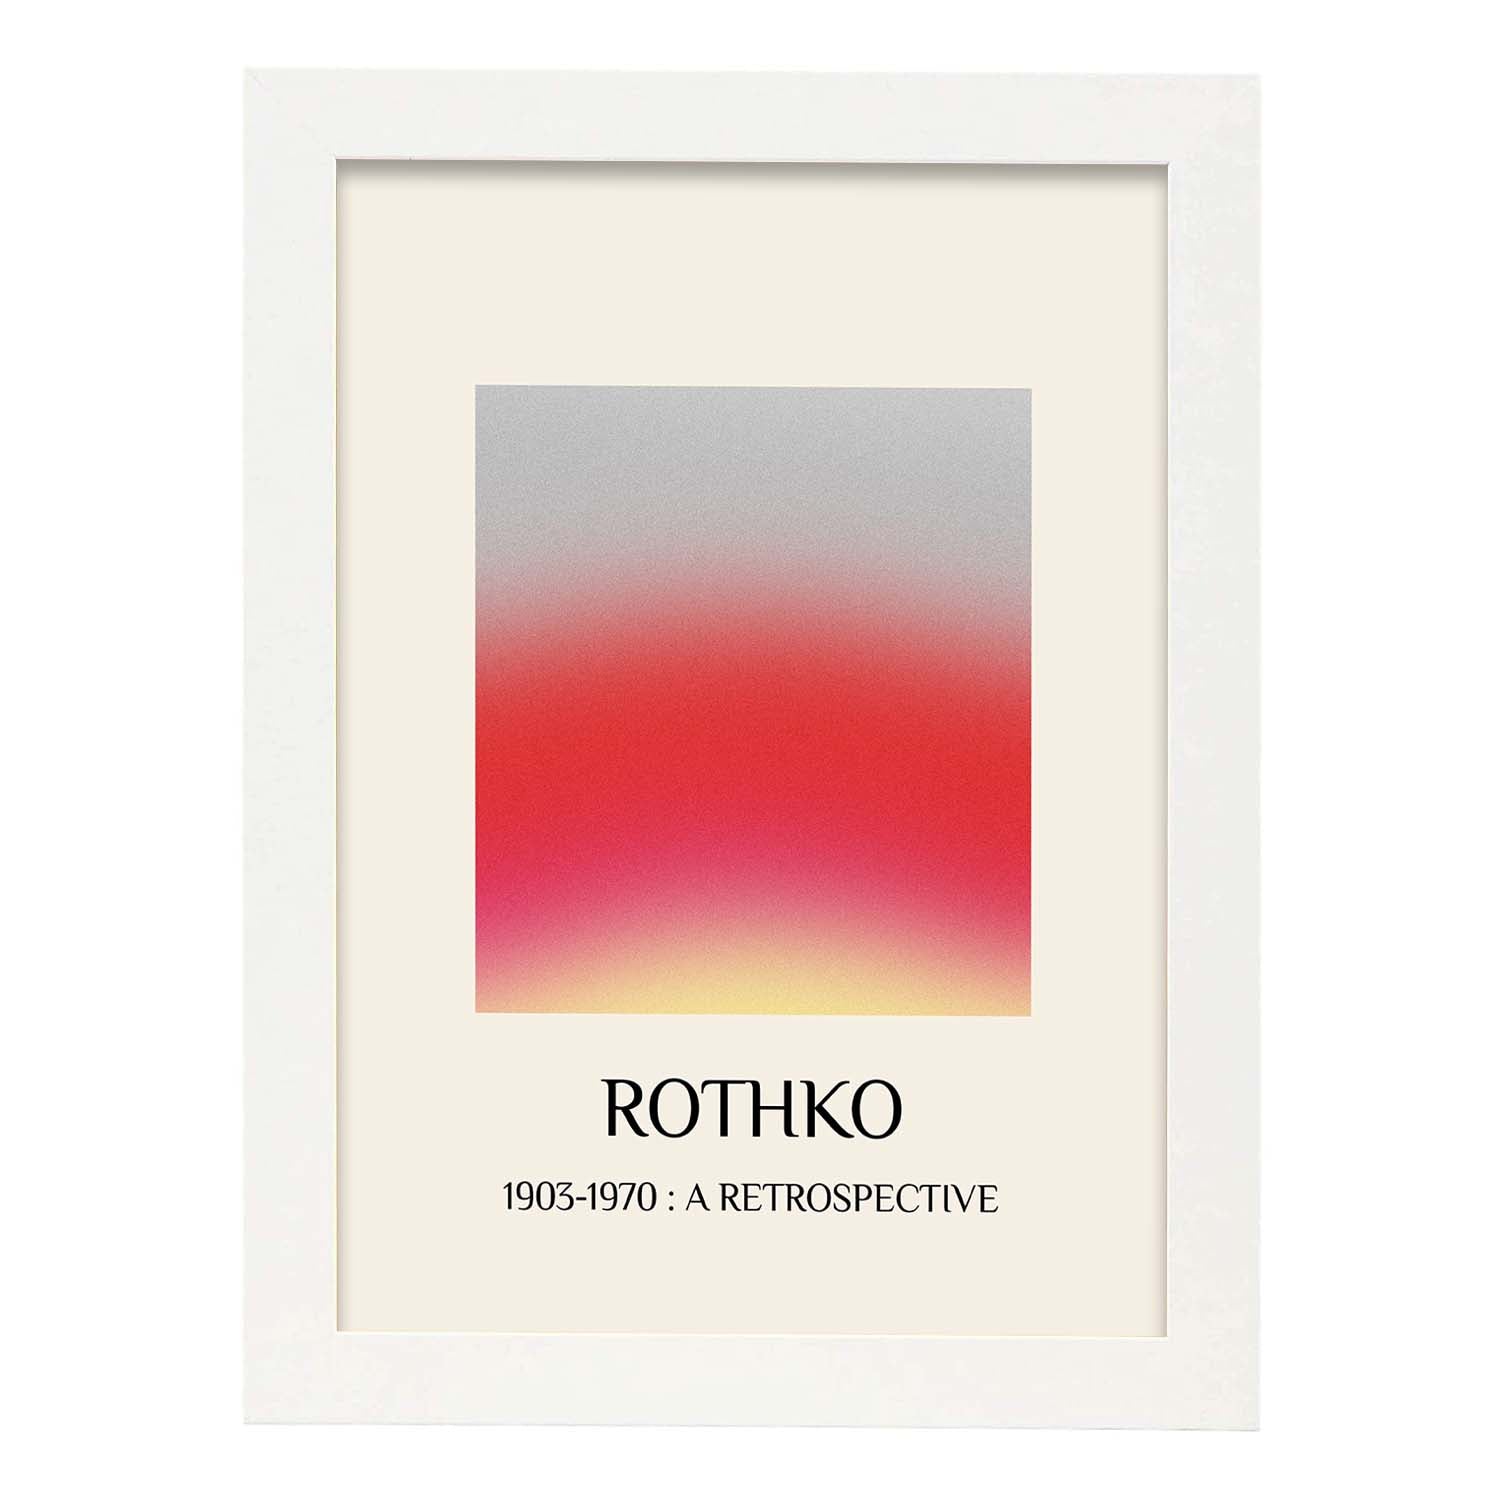 Lamina artistica decorativa con ilustración de Exposición Rothko 5 estilo expresionismo abstracto-Artwork-Nacnic-A3-Marco Blanco-Nacnic Estudio SL